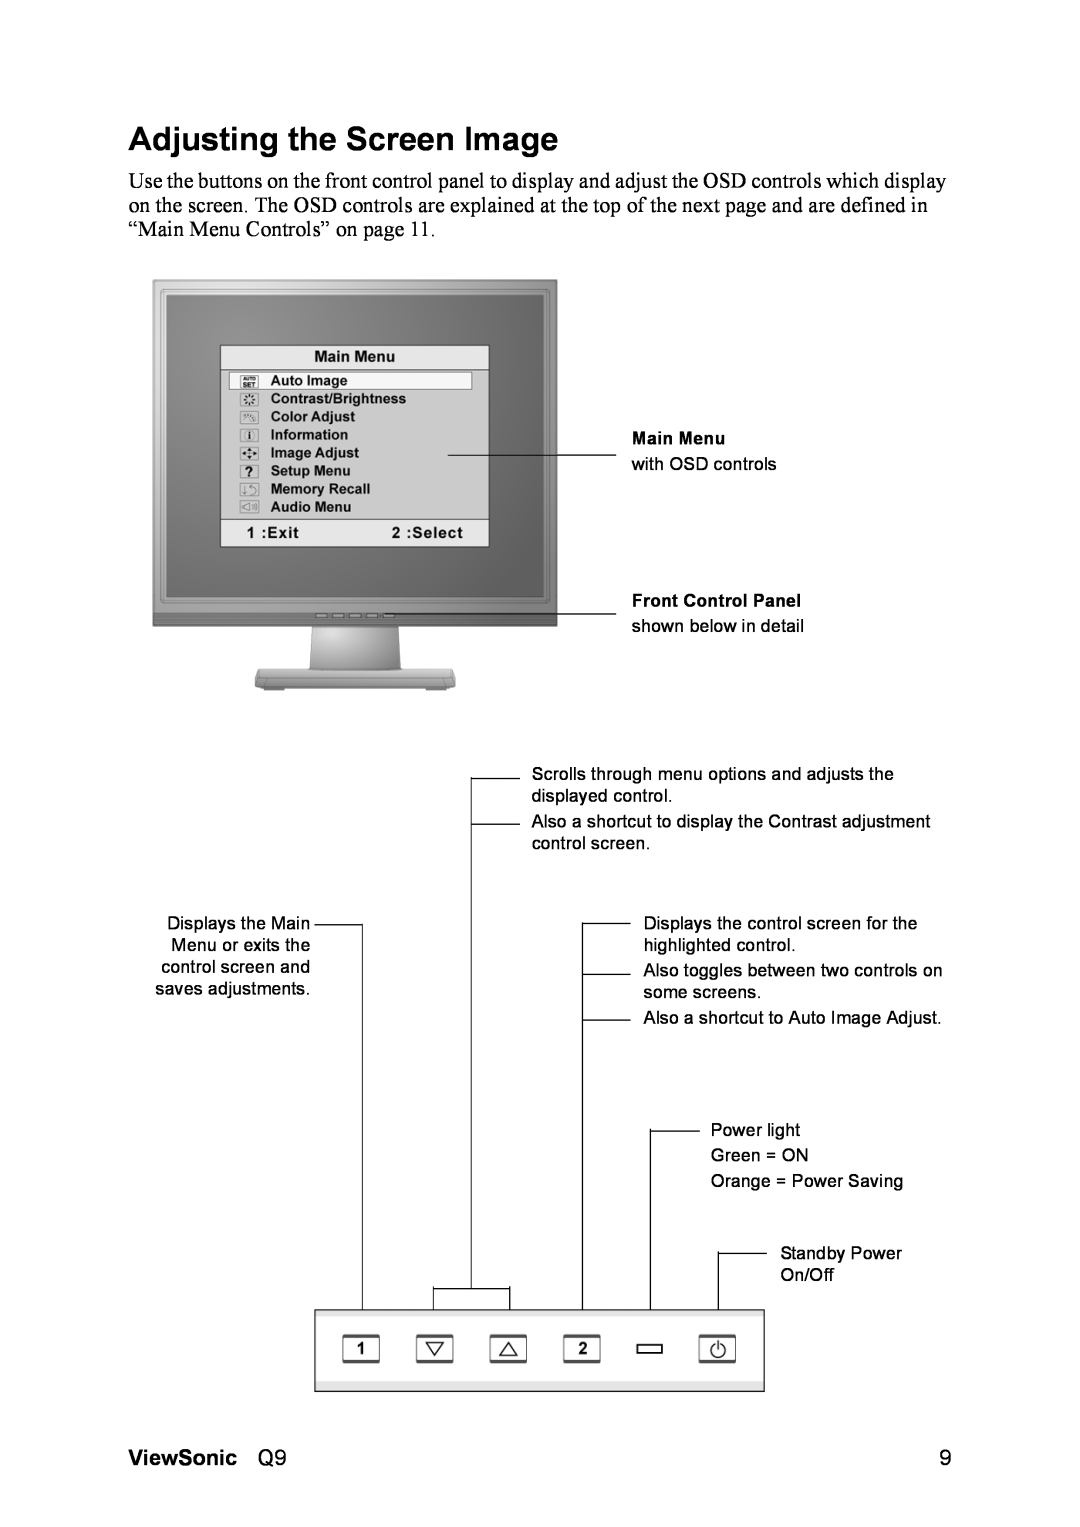 ViewSonic Q9B manual Adjusting the Screen Image, ViewSonic Q9, Main Menu, Front Control Panel 